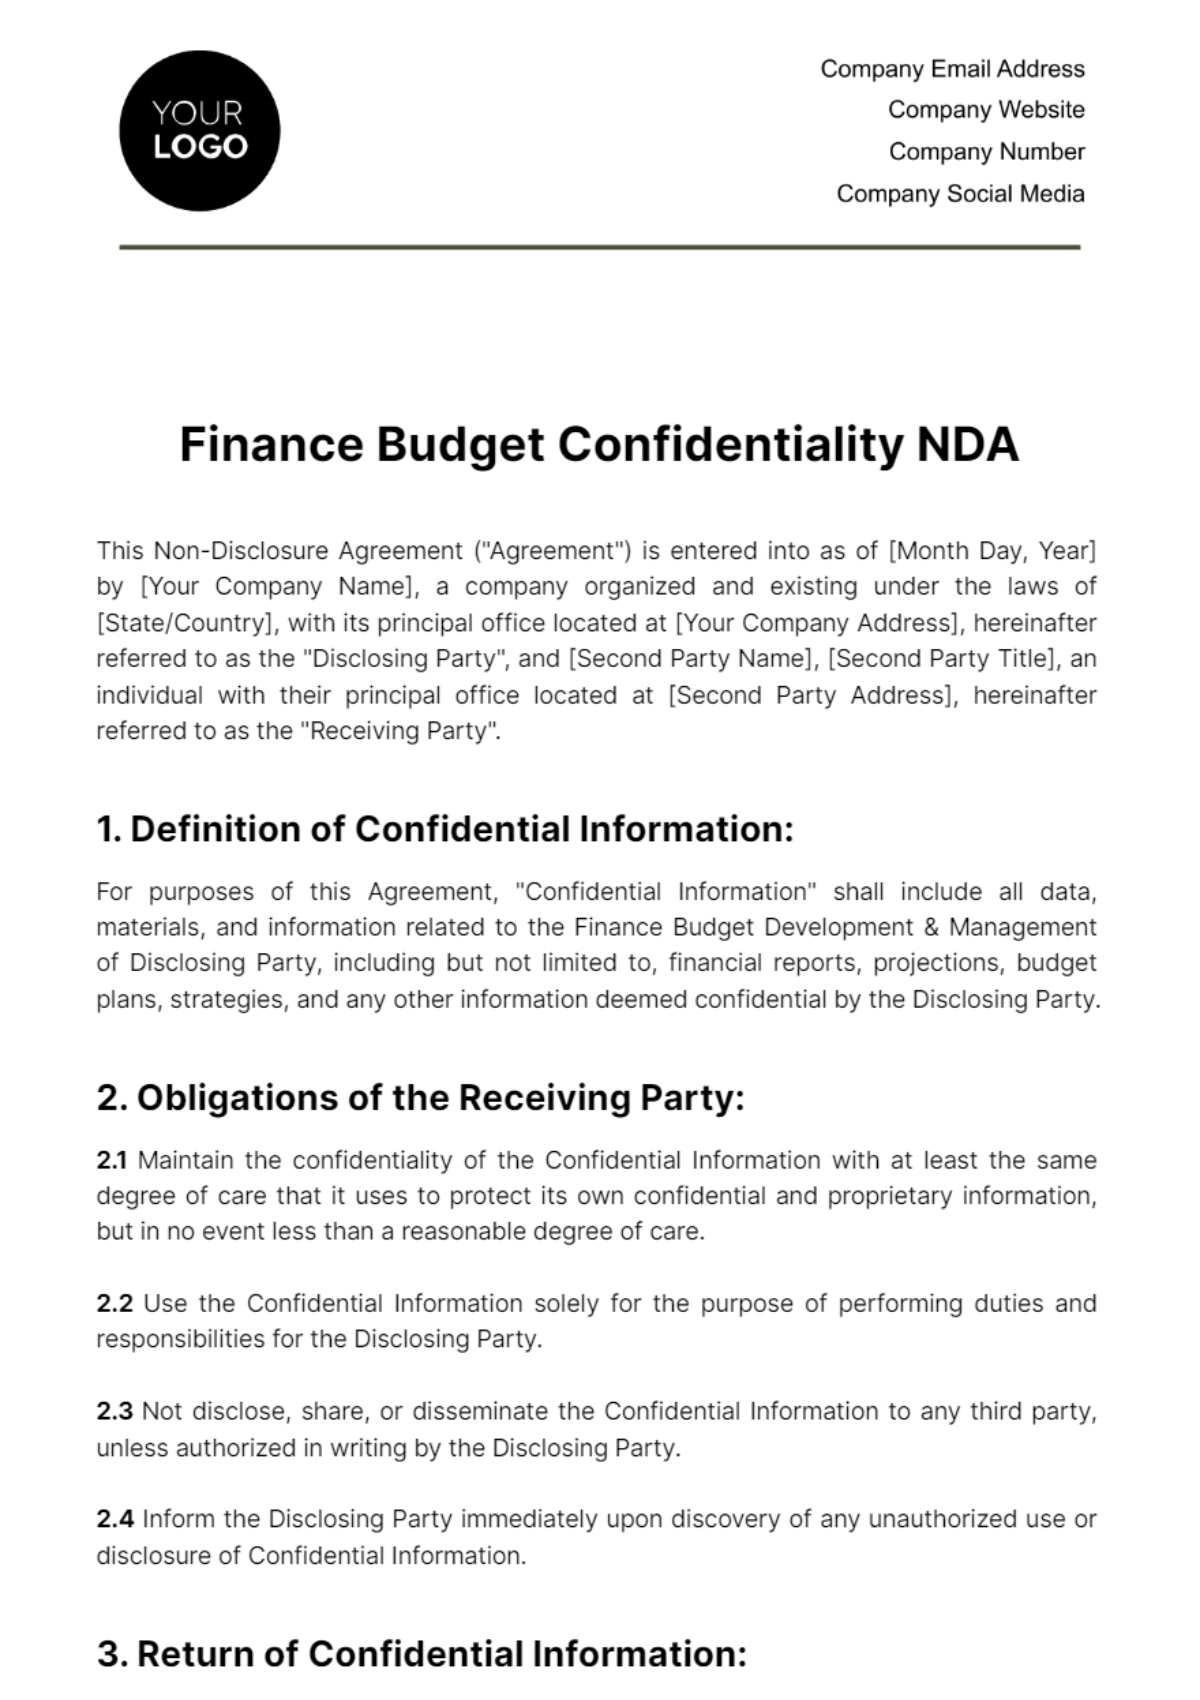 Free Finance Budget Confidentiality NDA Template